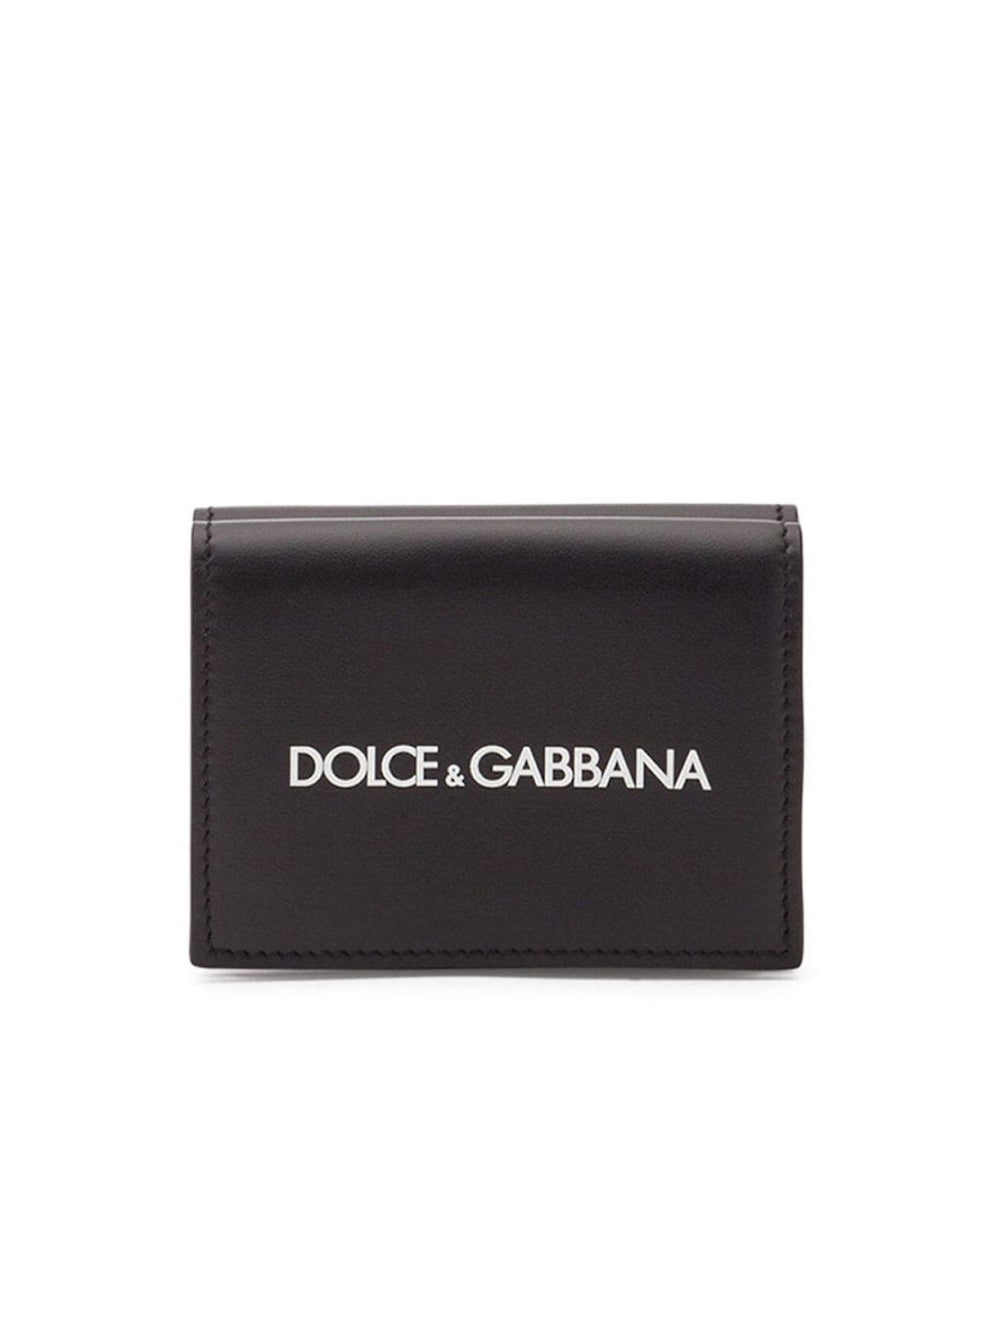 Dolce & Gabbana-OUTLET-SALE-Logo Print Bifold Wallet-ARCHIVIST